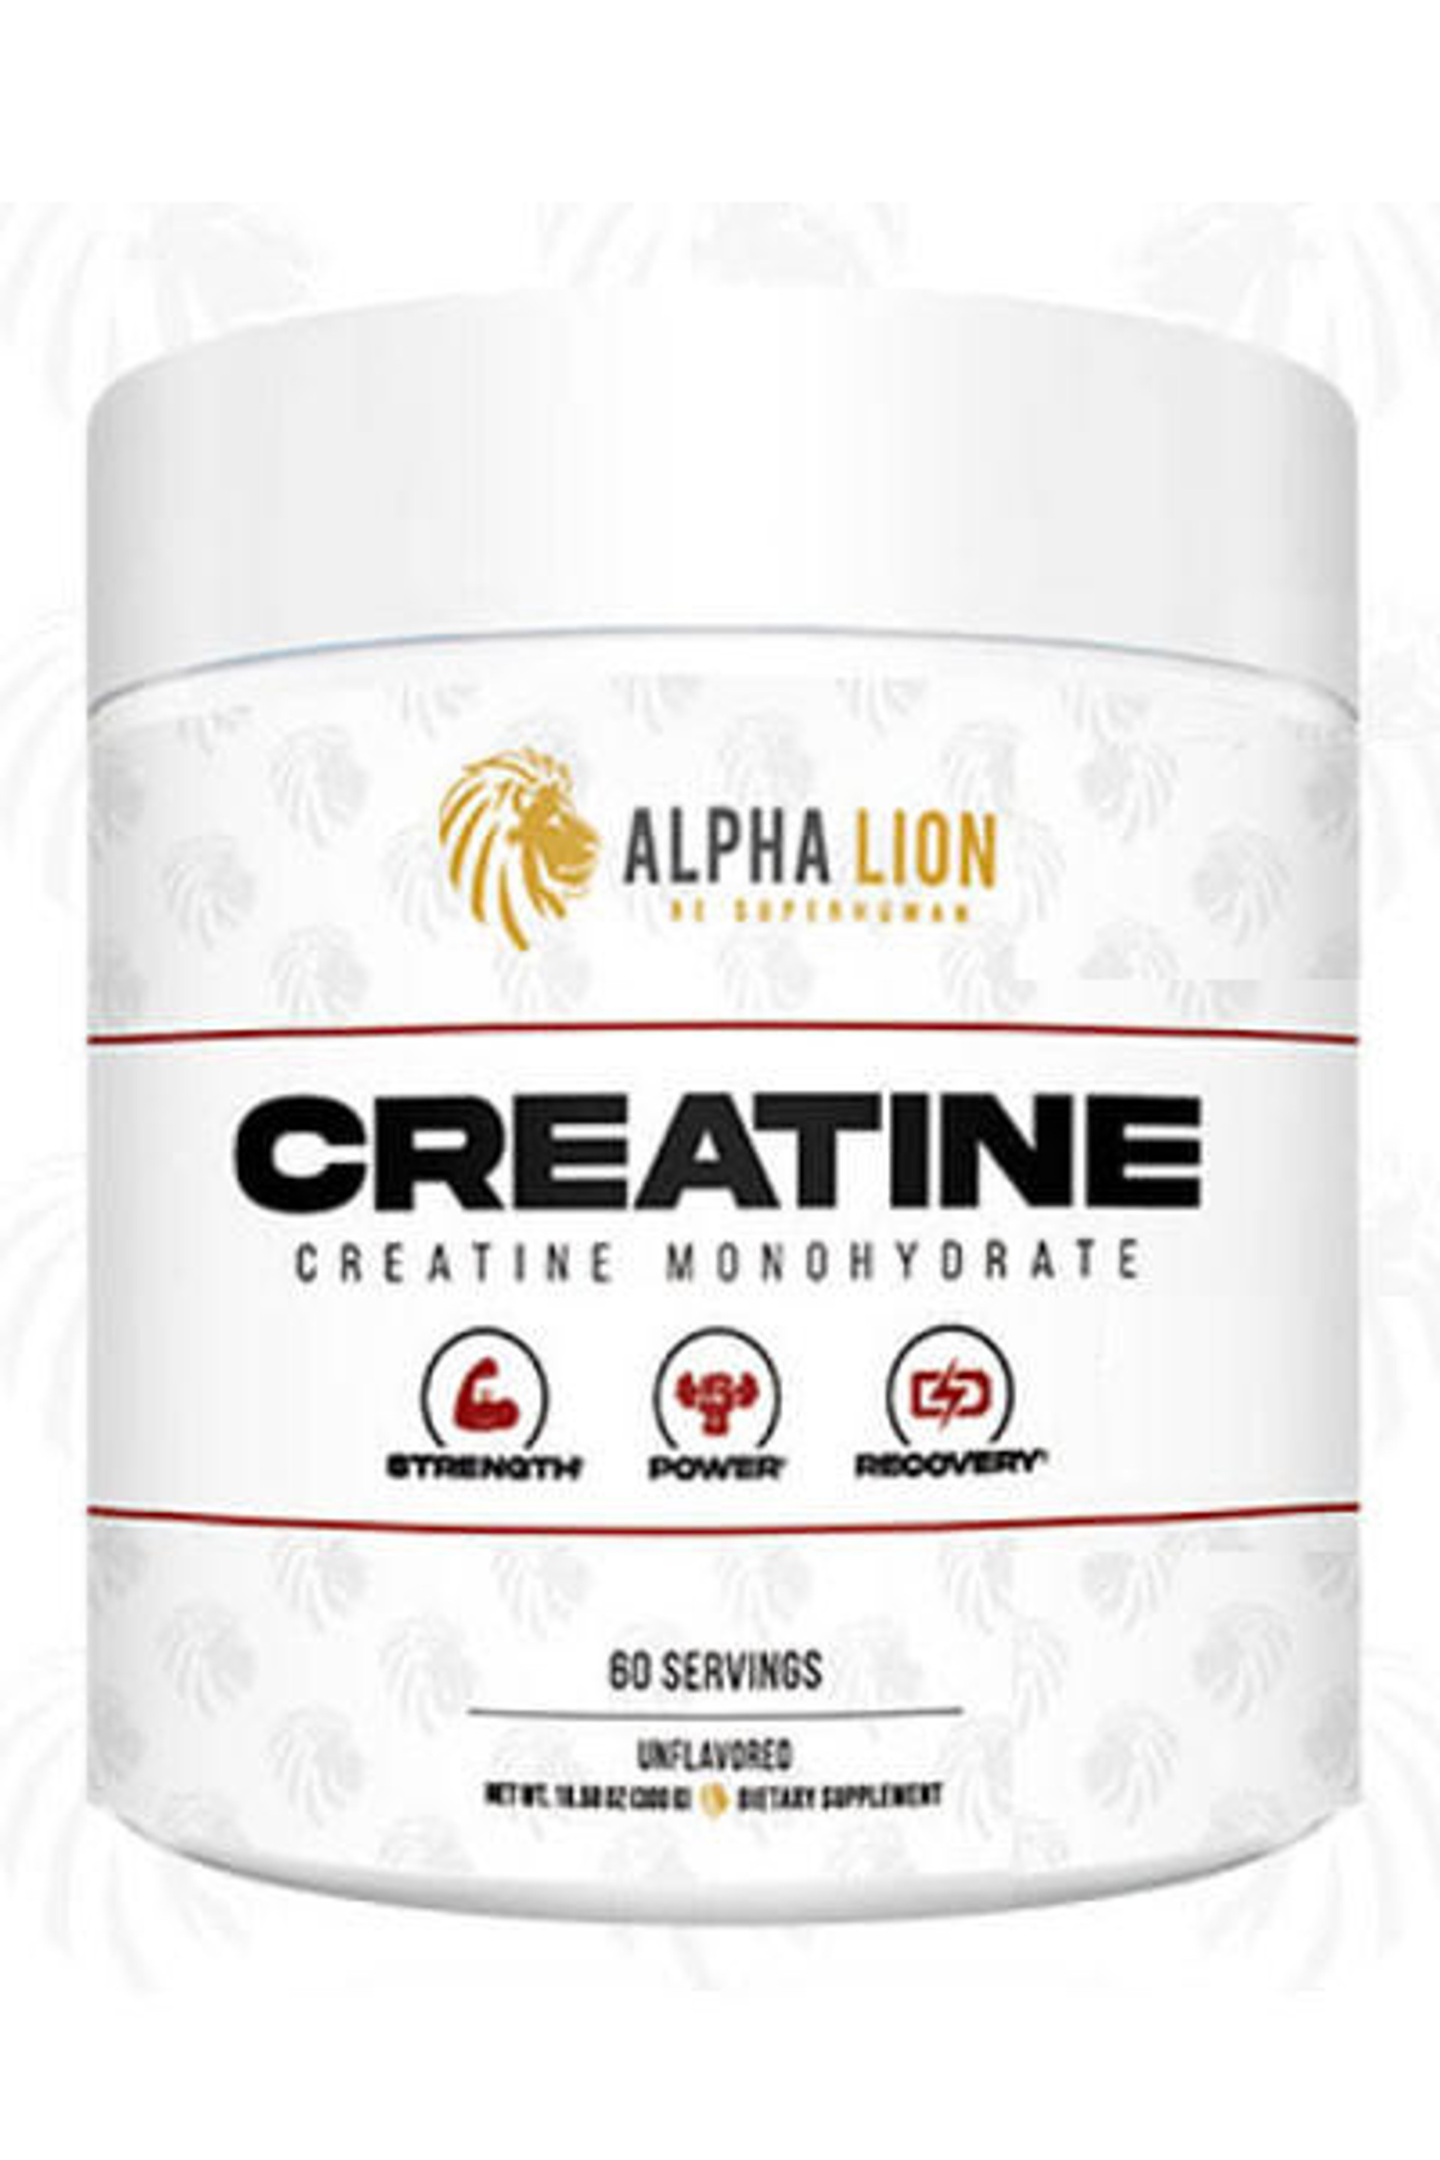 Creatine Monohydrate by Alpha Lion